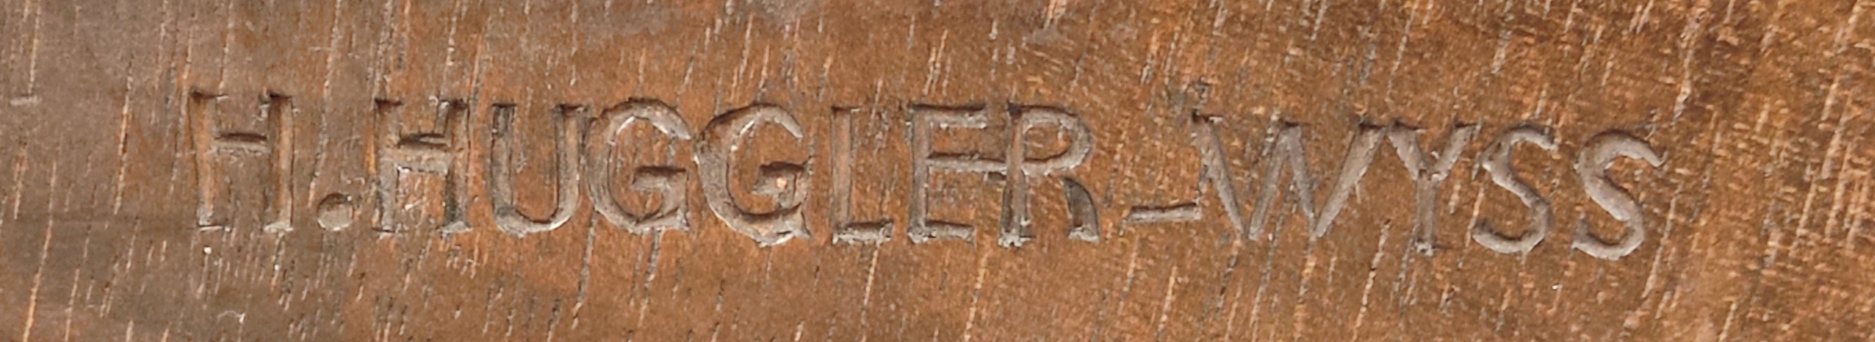 Huggler-Wyss, Hans (1877 Brienz - 1947 Interlaken) "Marmot", carved wood, on cube-shaped base, sign - Image 2 of 2